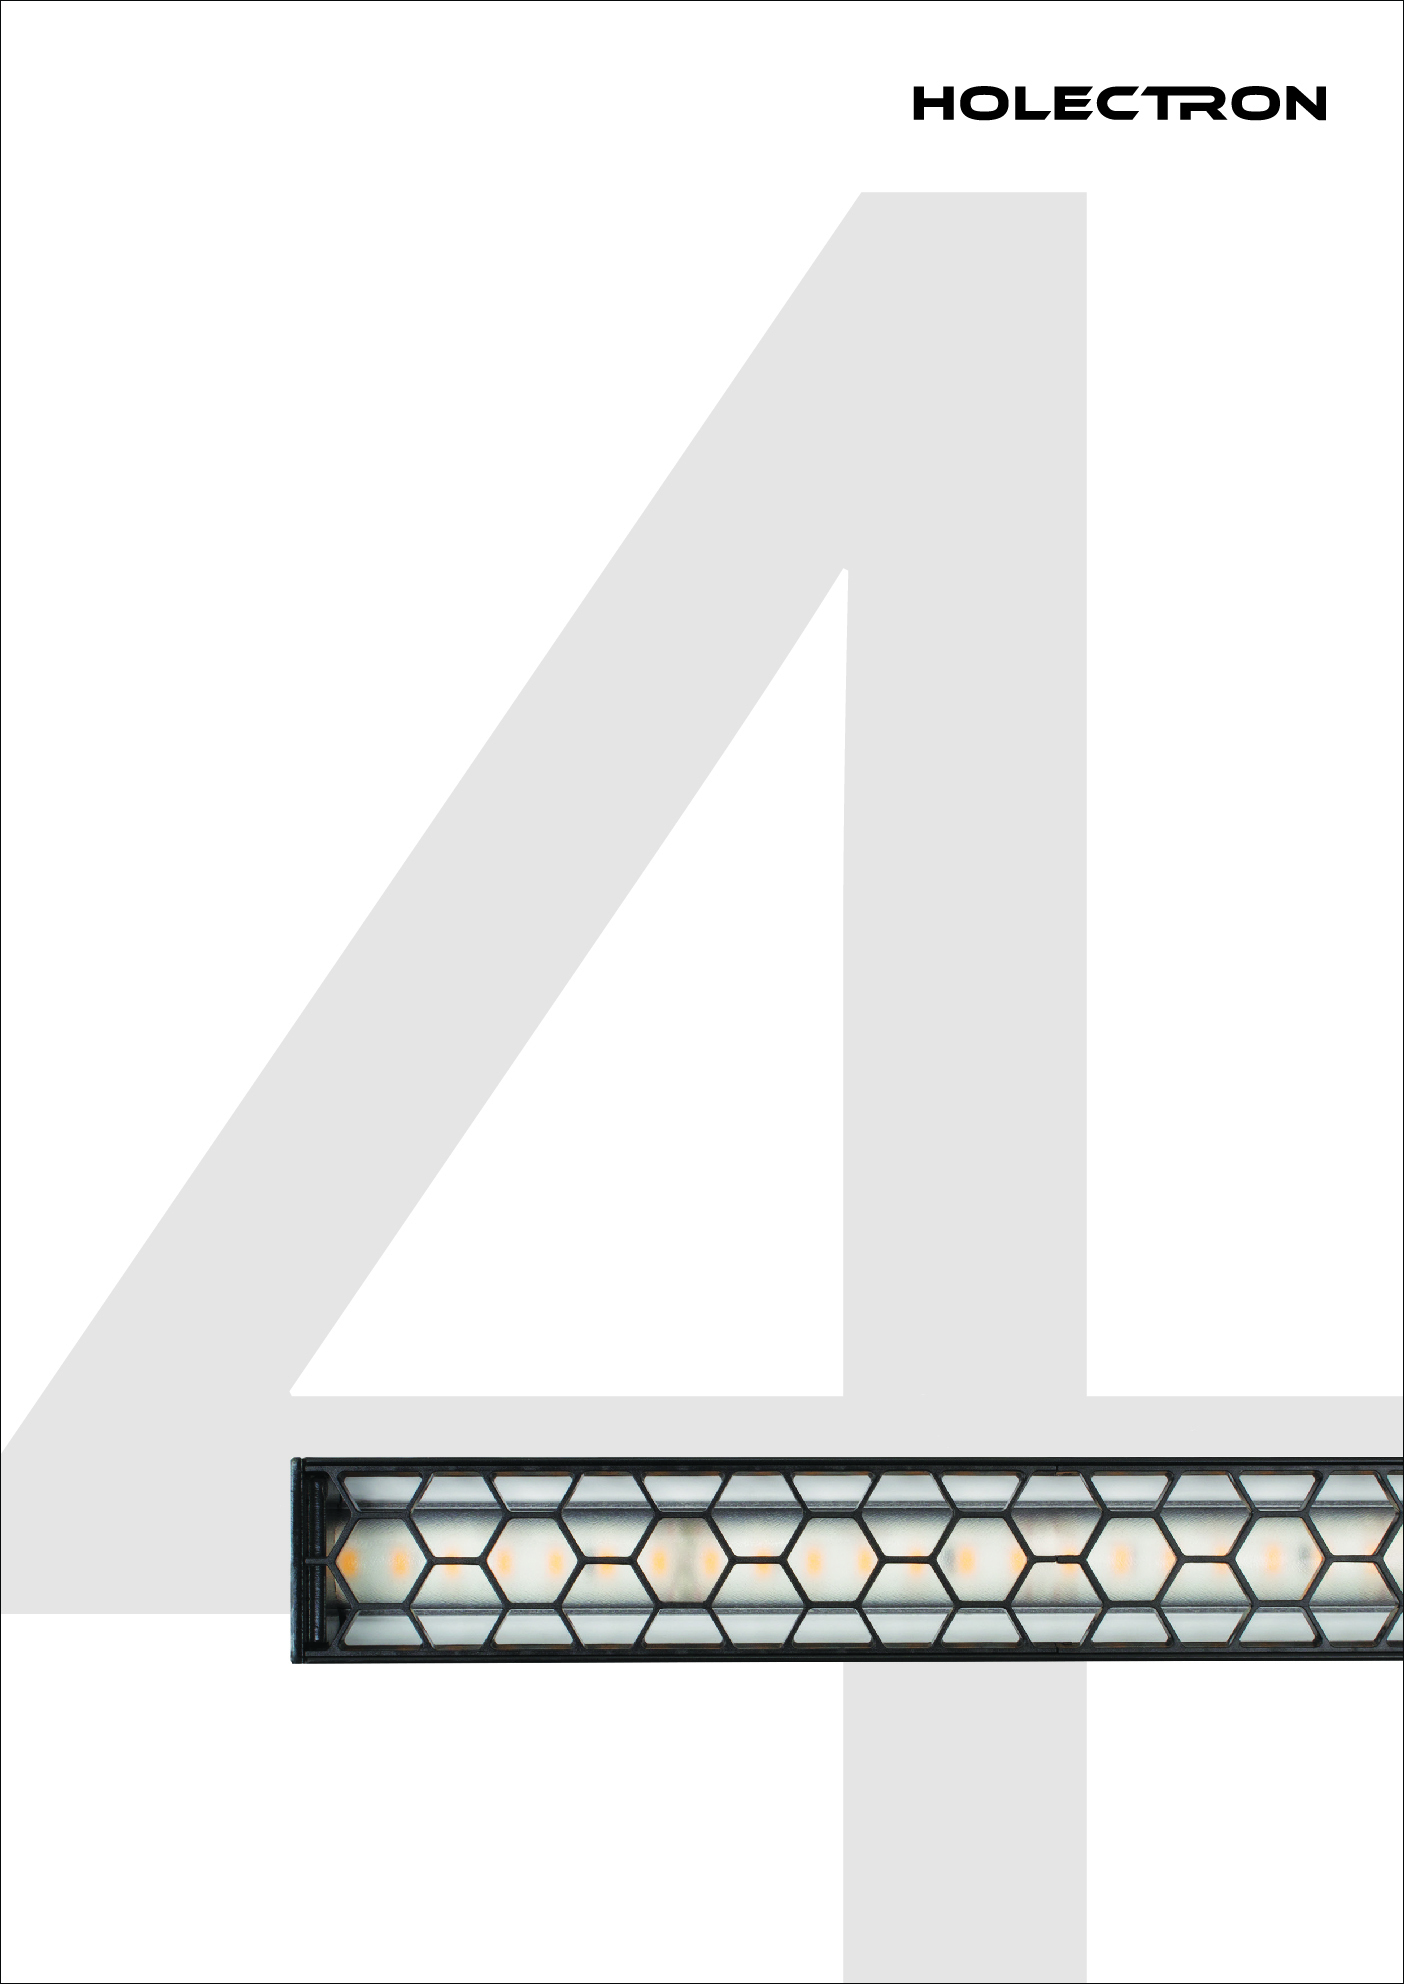 New Holectron linear LED lighting catalog